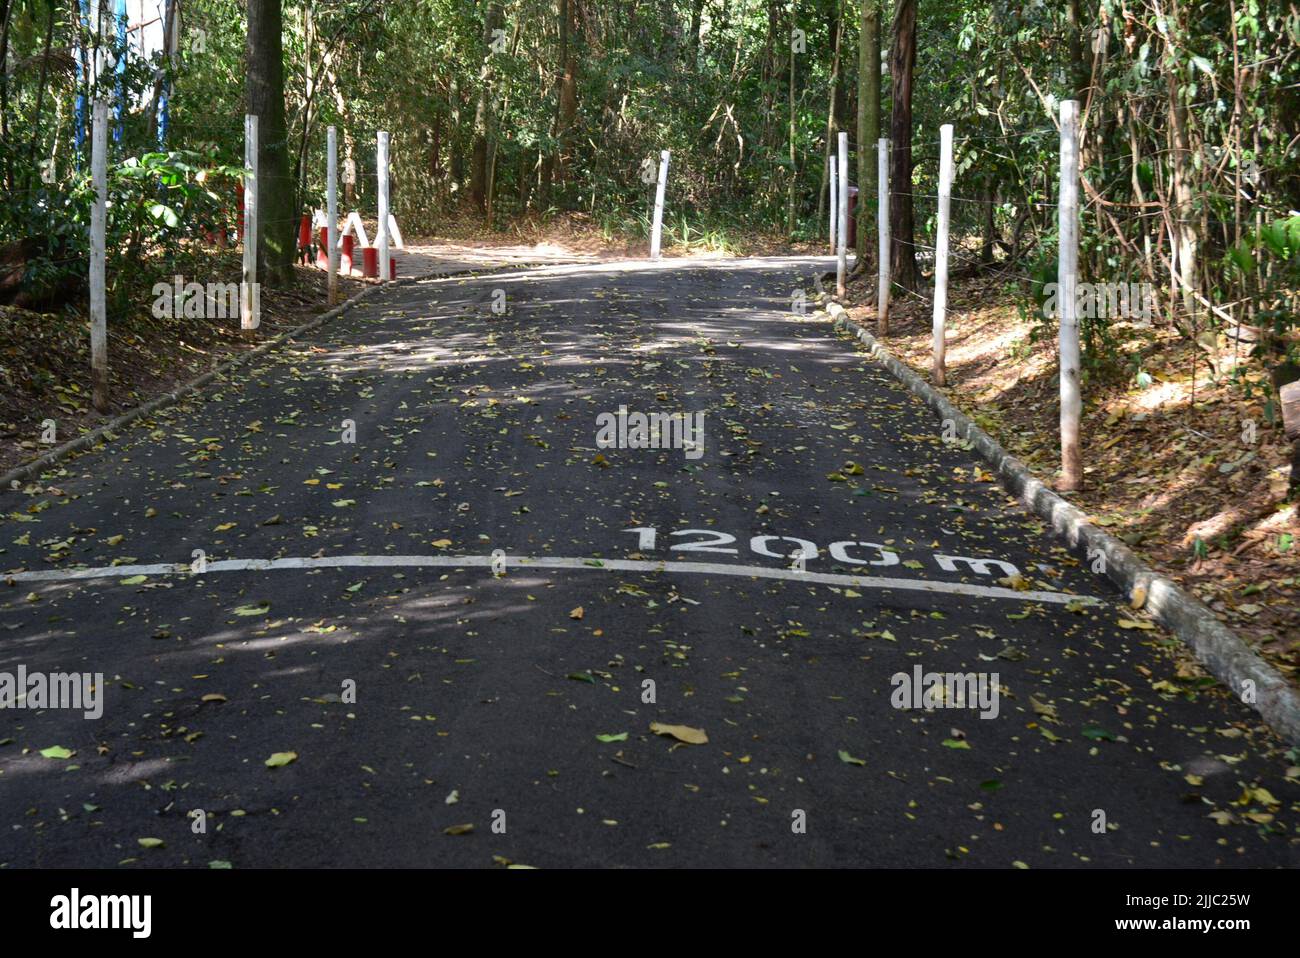 Walking spot with 1,200 meters marking on asphalt floor, Brazil, South America Stock Photo